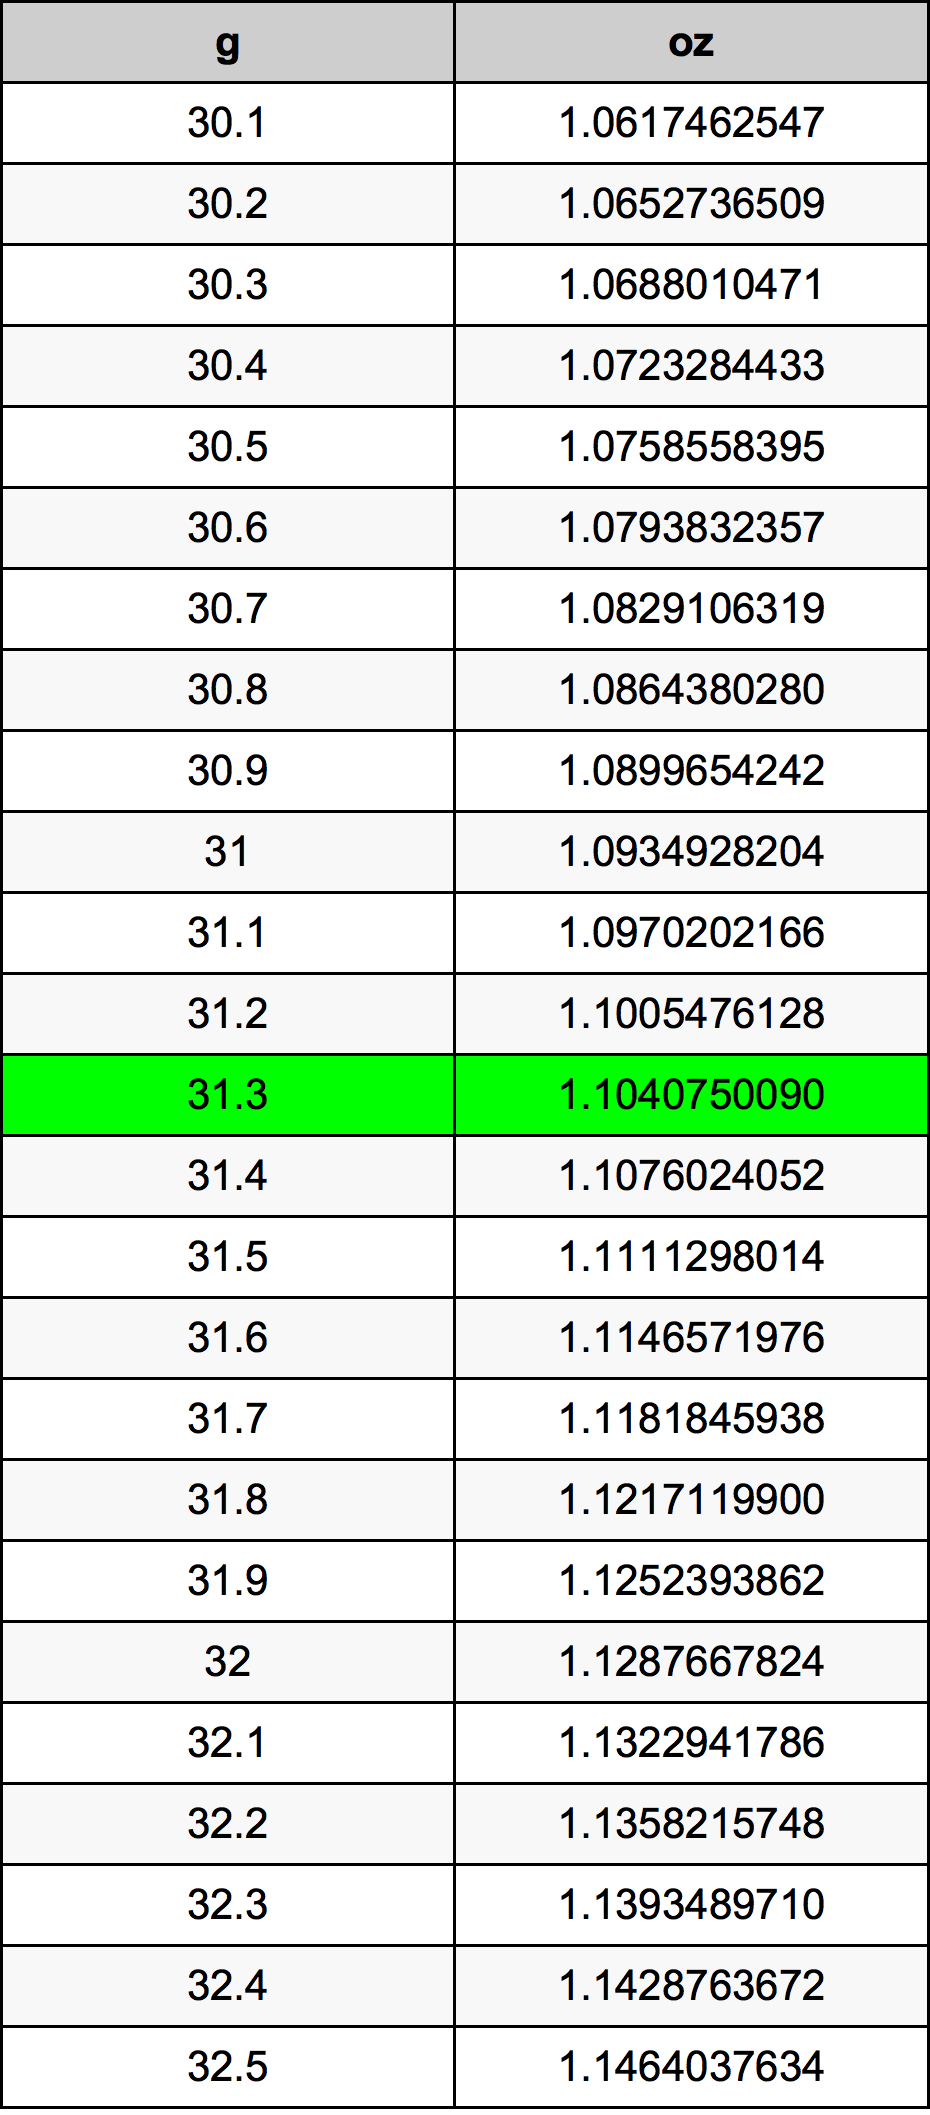 31.3 غرام جدول تحويل